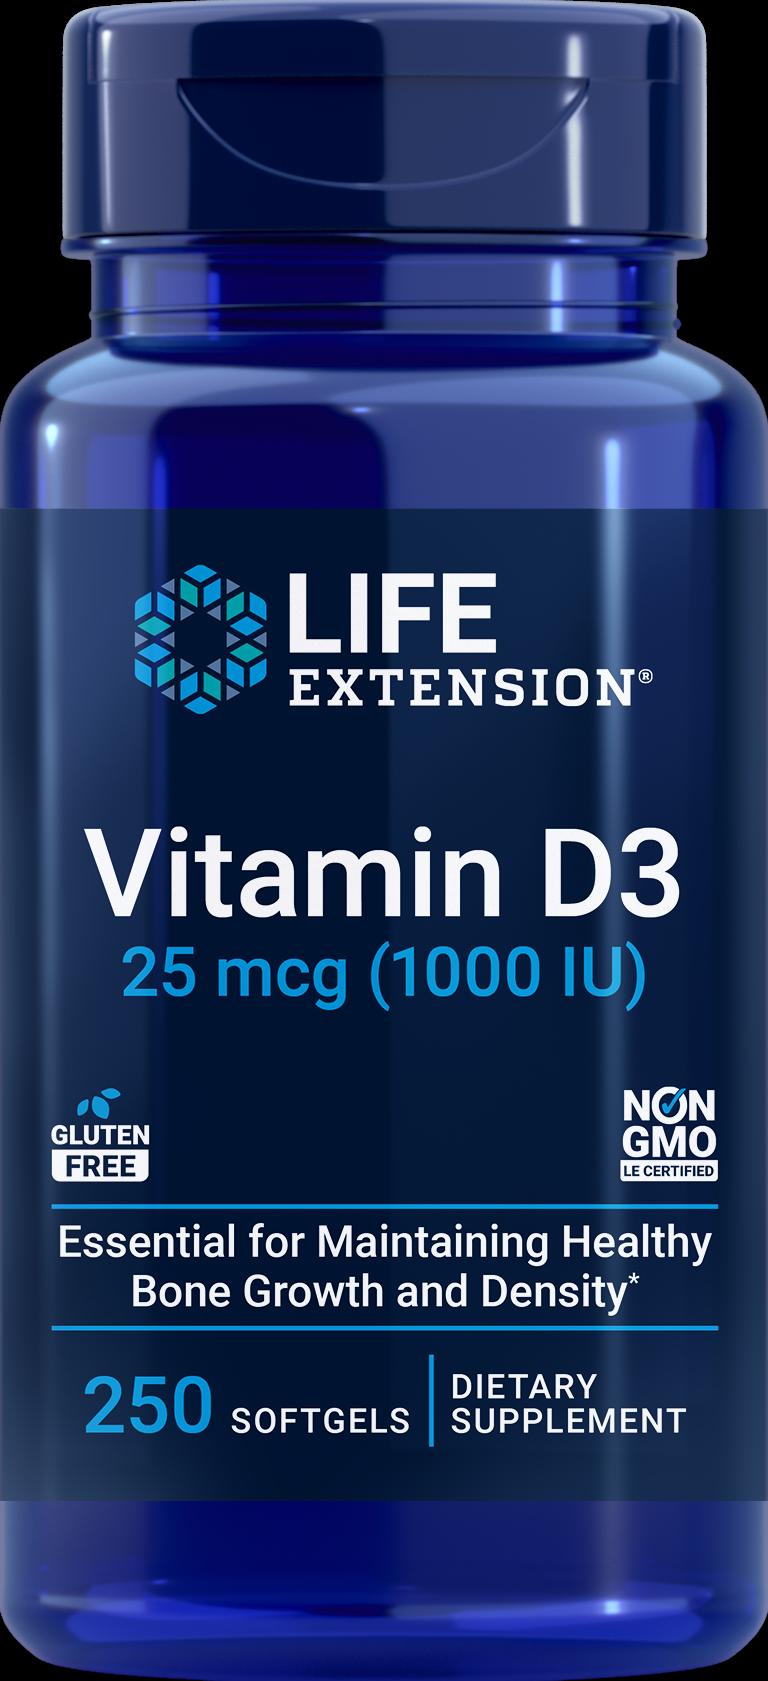 A blue bottle of Life Extension Vitamin D3 softgels.